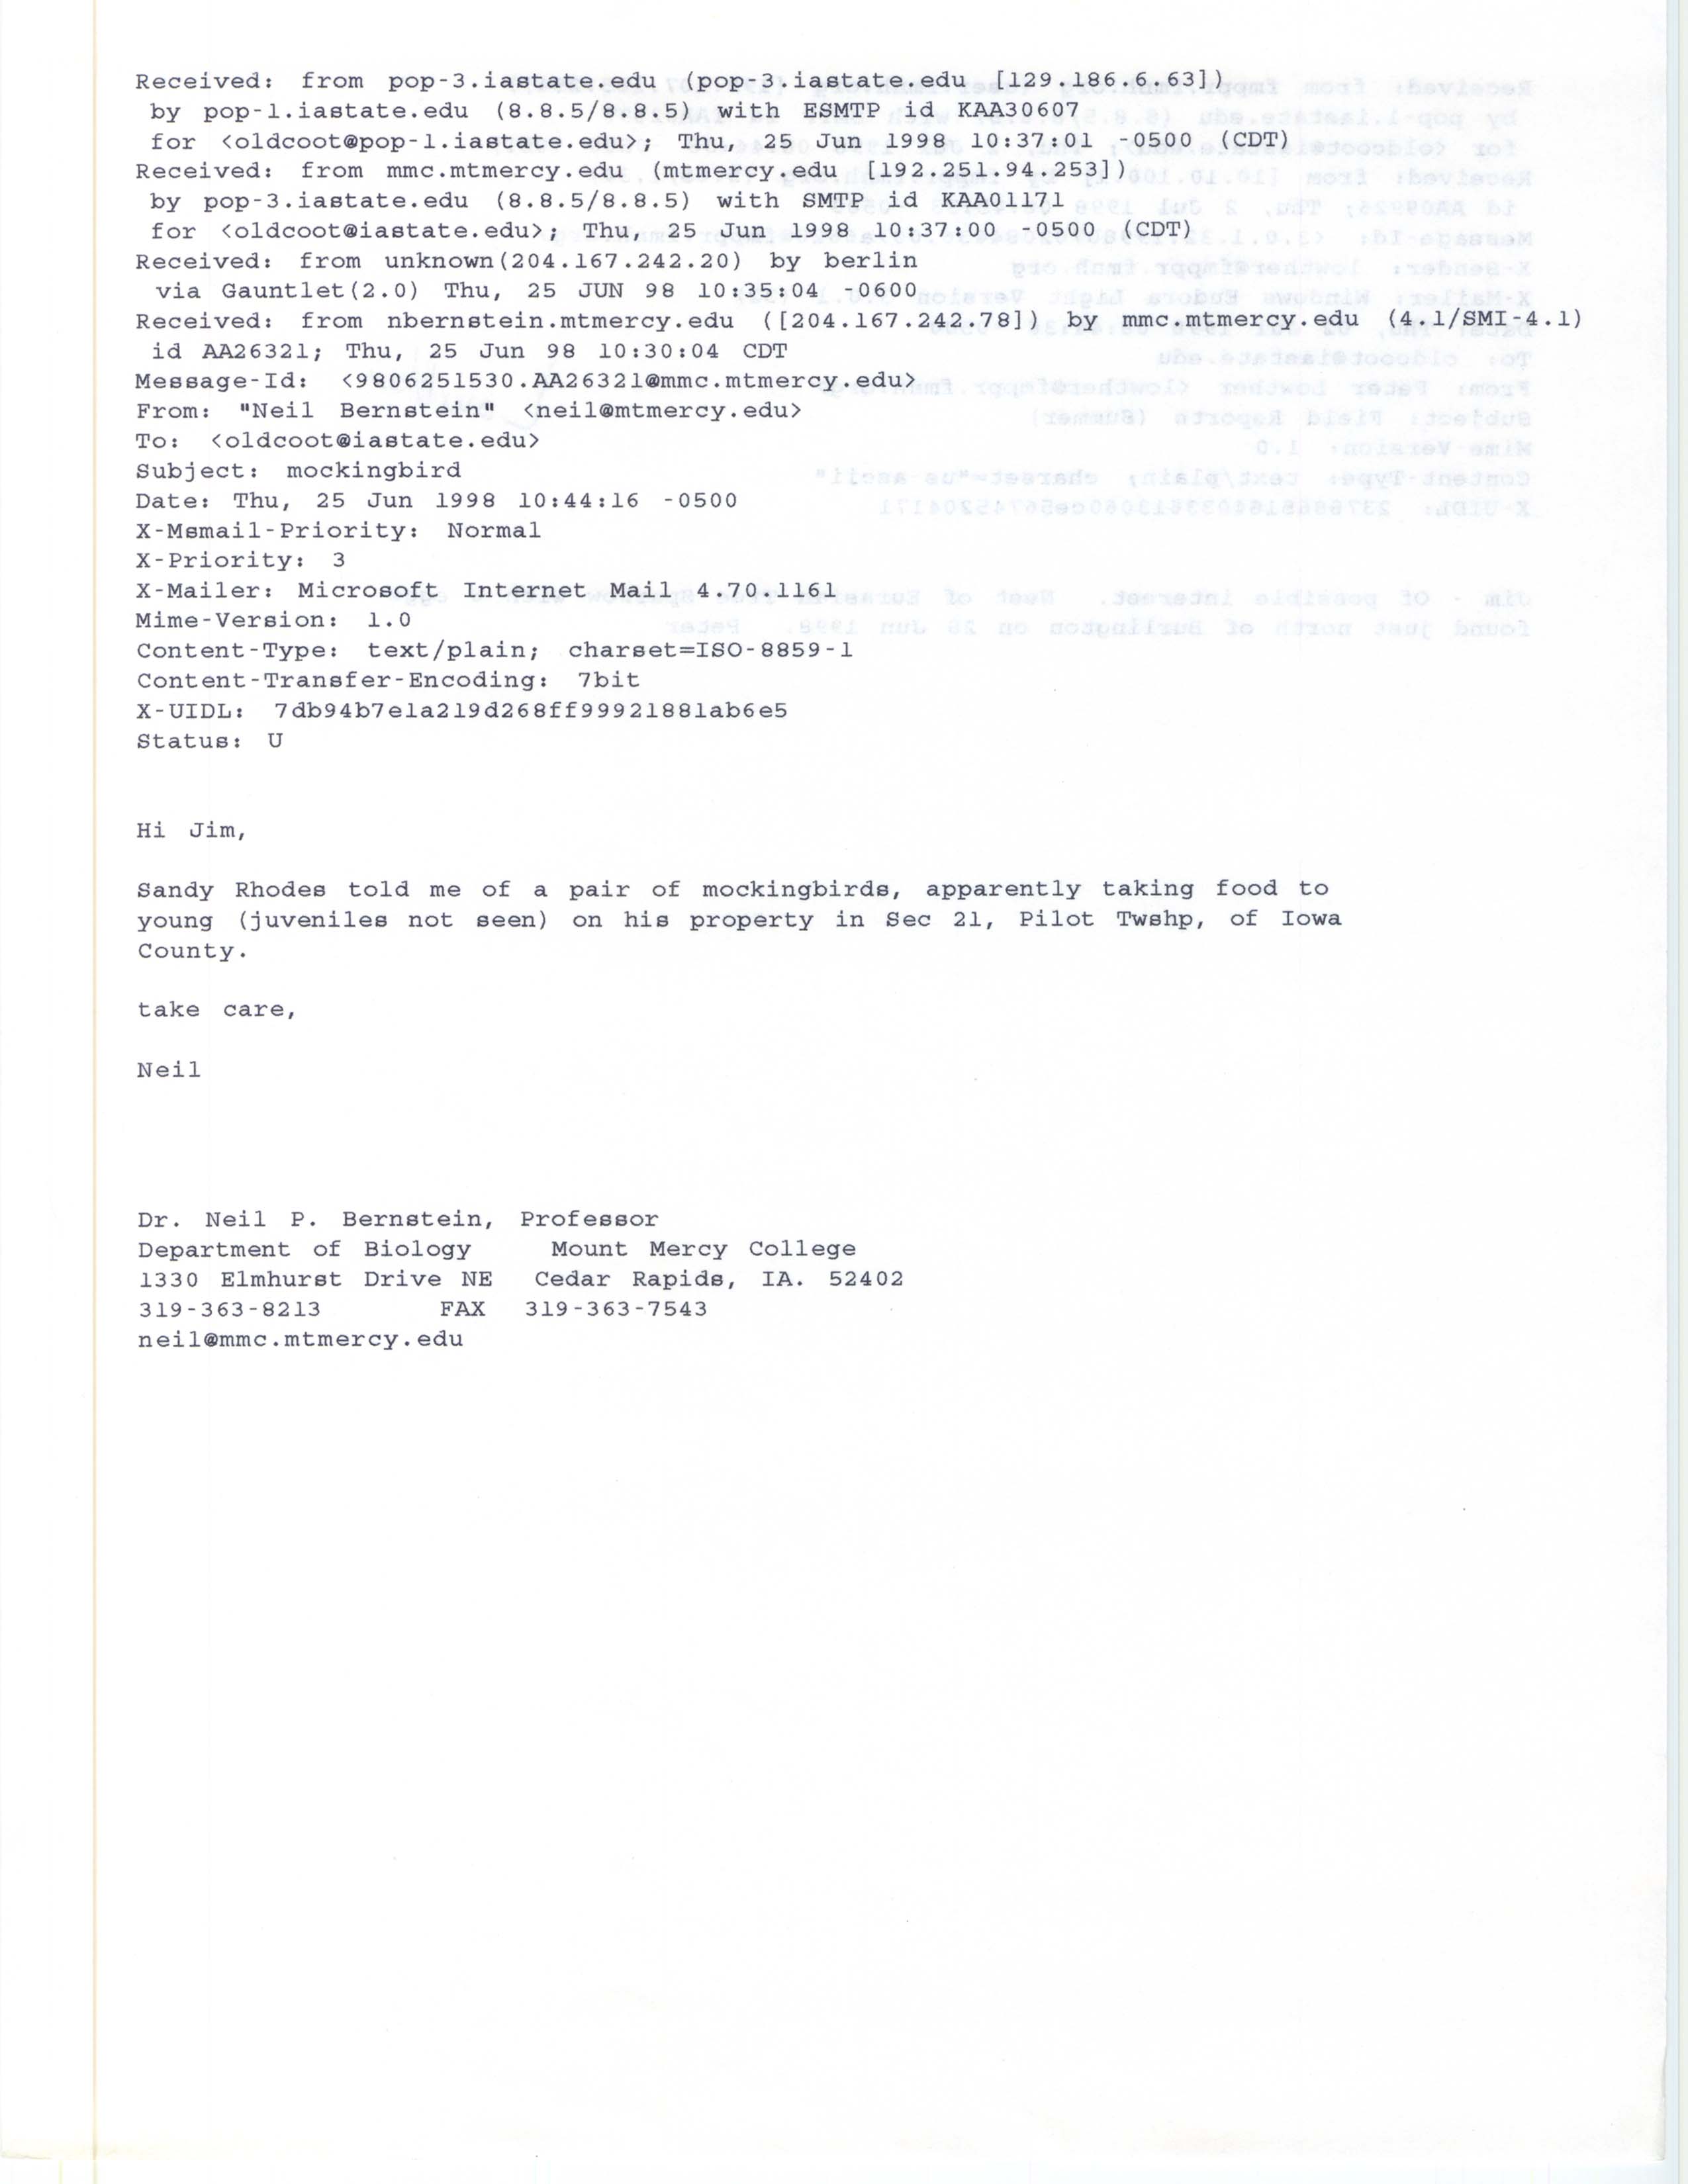 Neil Bernstein email to Jim Dinsmore regarding Mockingbird sighting, June 25, 1998